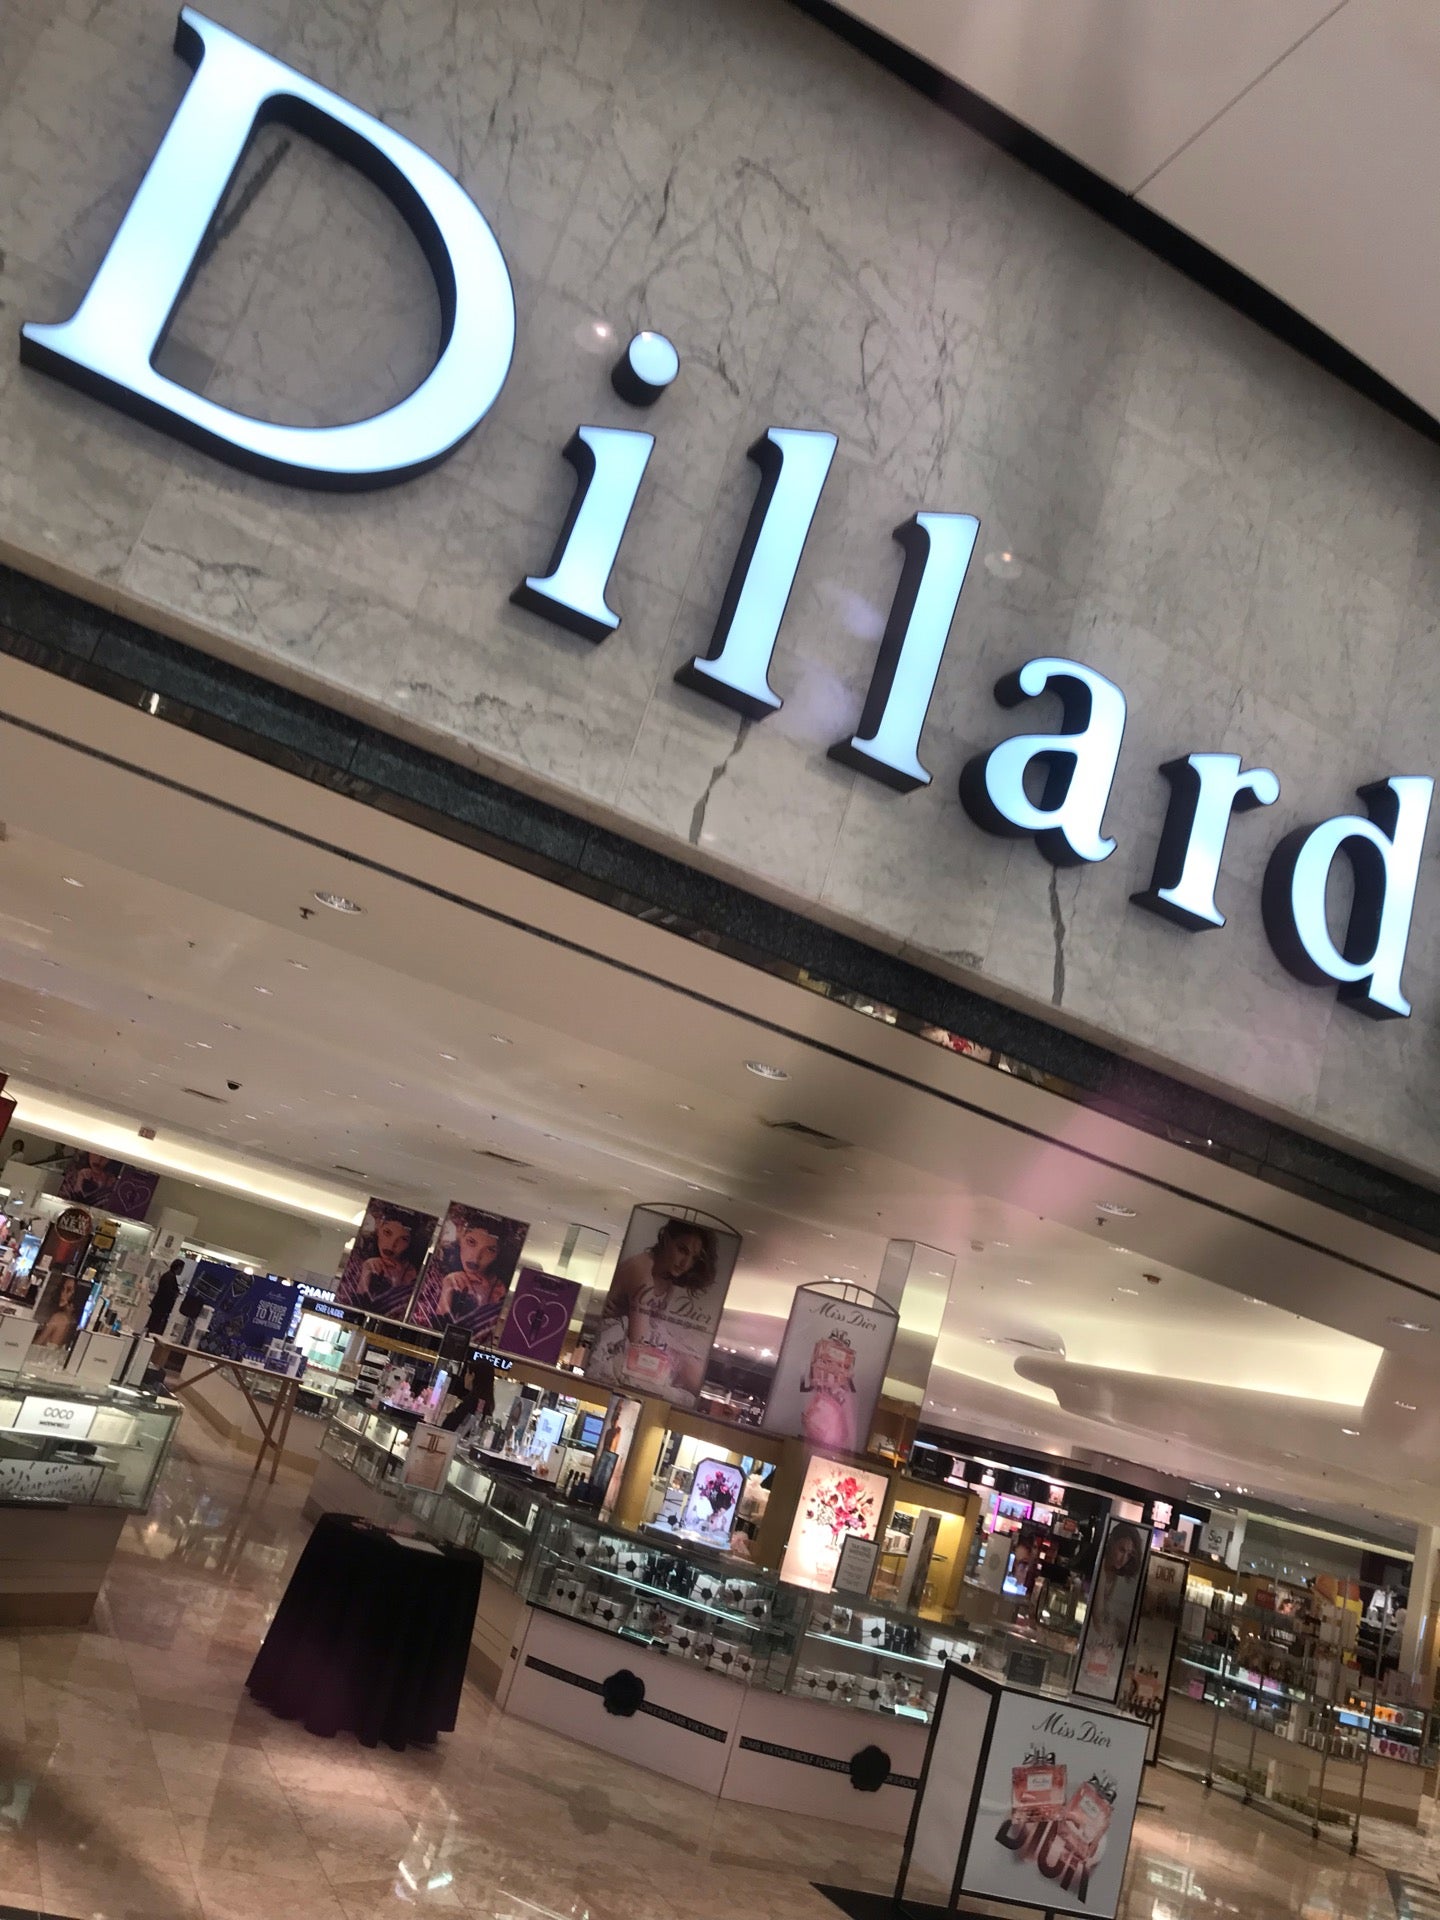 Dillard's, 5488 S Padre Island Dr, Corpus Christi, TX, Department Stores -  MapQuest